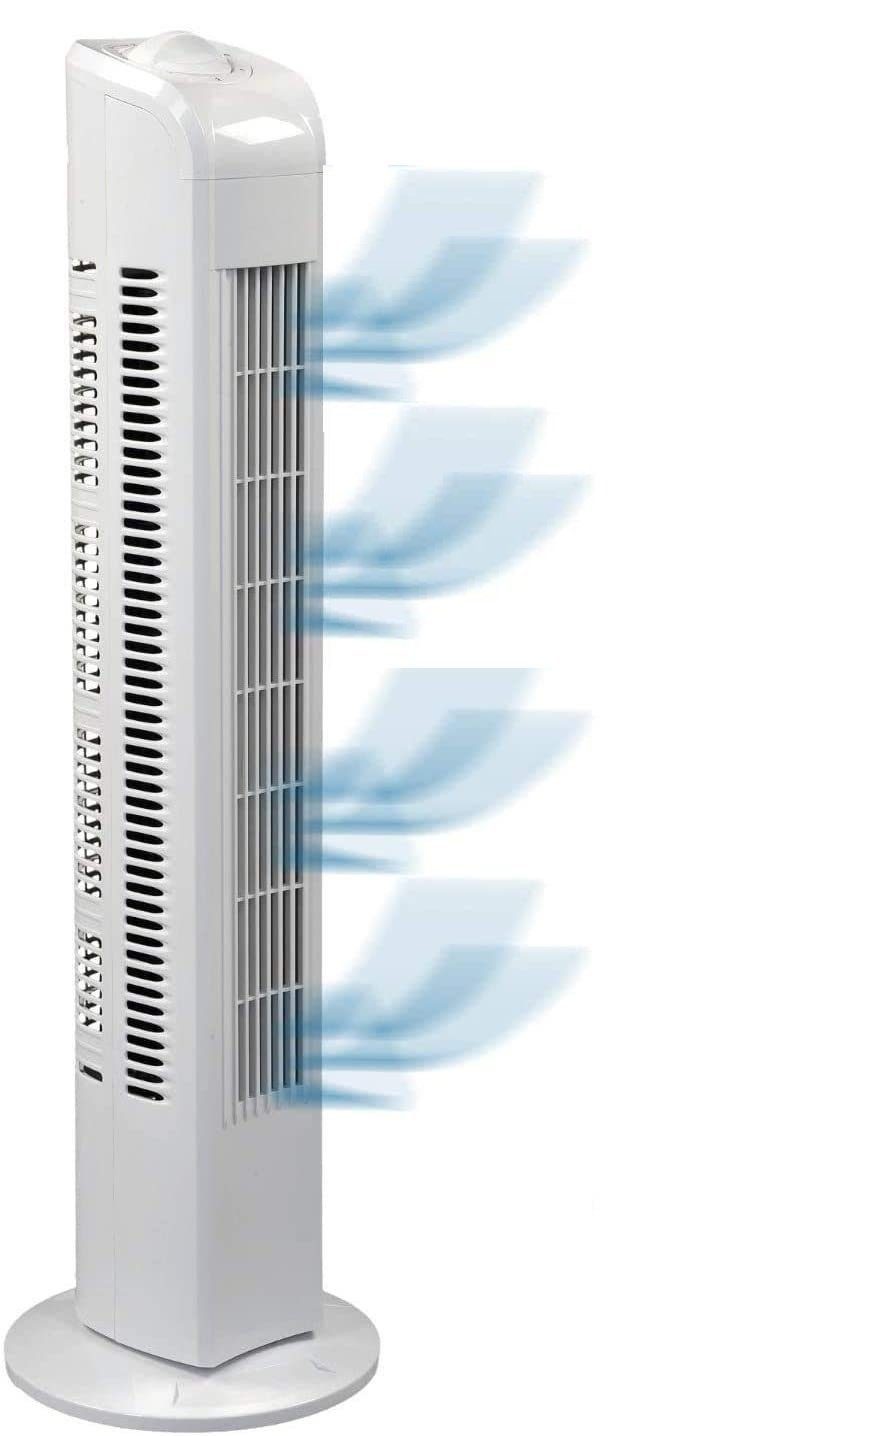 JUNG Turmventilator TF35 Ventilator 78cm Turmventilator Вентиляторы, 75° Oszillation, Standventilator, 50W Turmlüfter, bis 40m², leise, Вентиляторы